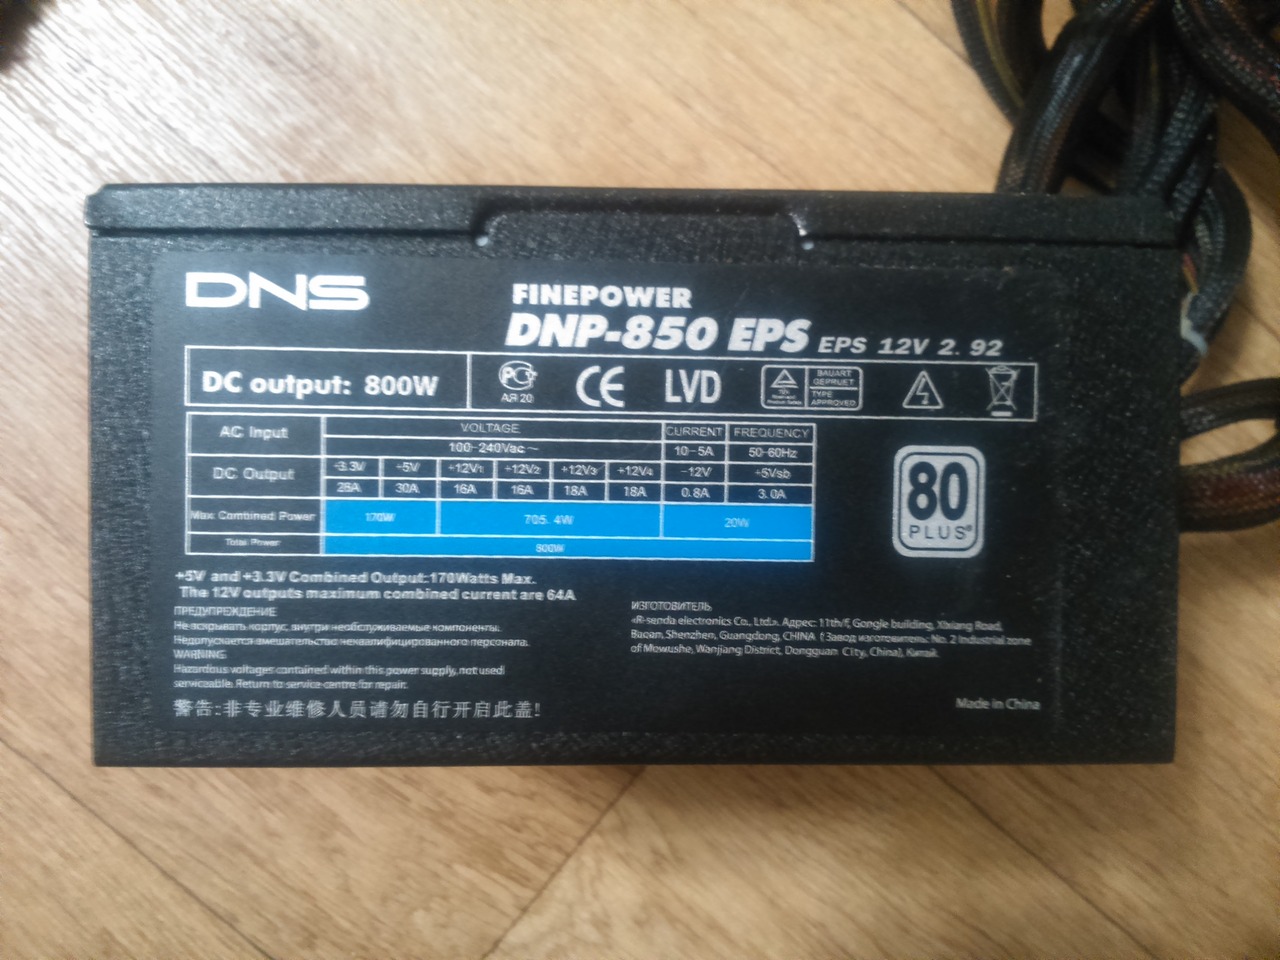 Фине повер. Блок питания DNP 850eps. Блок питания DNS FINEPOWER DNP-850eps 800w. DNP-850 eps. Блок питания DCM-800eps FINEPOWER.